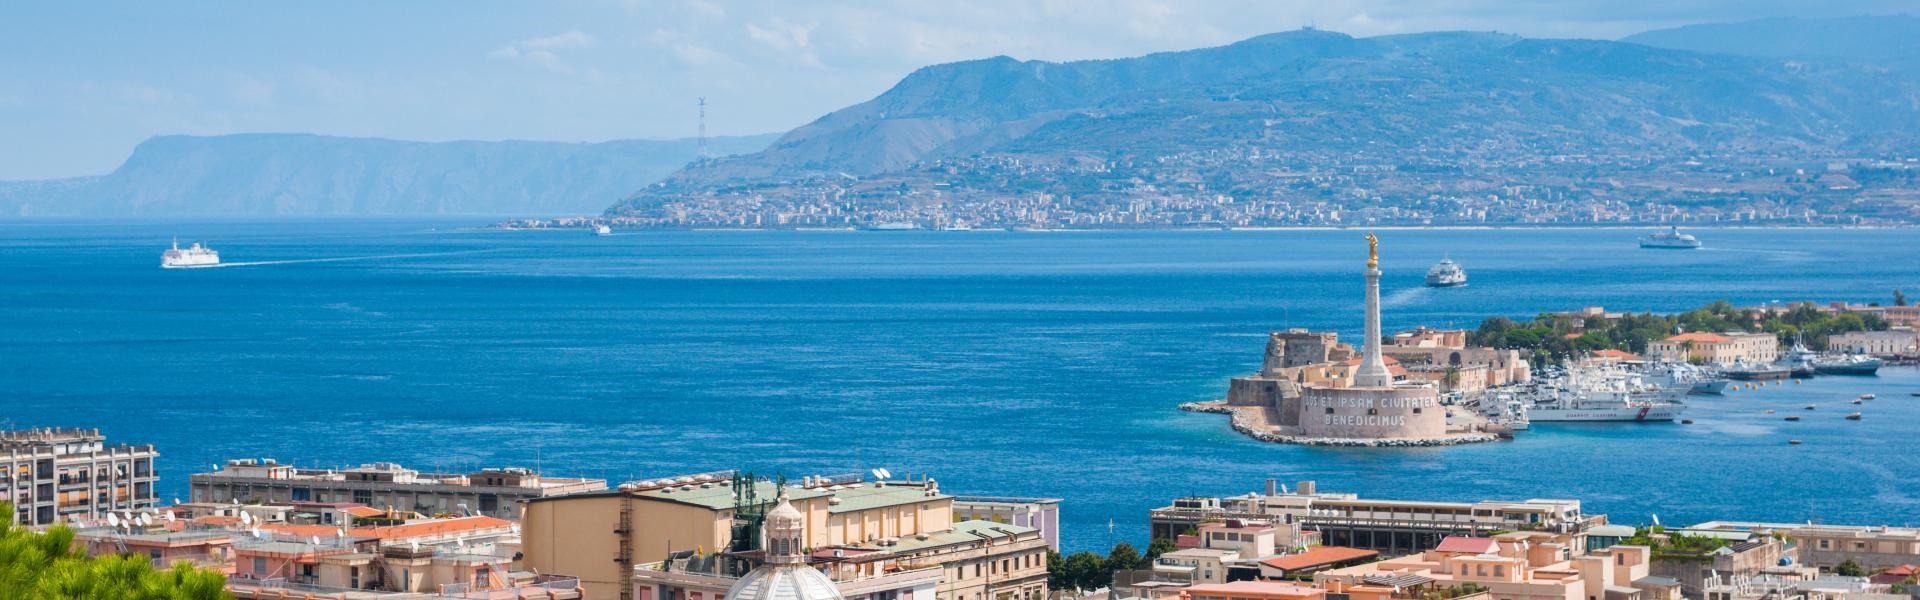 Messina Scenic View